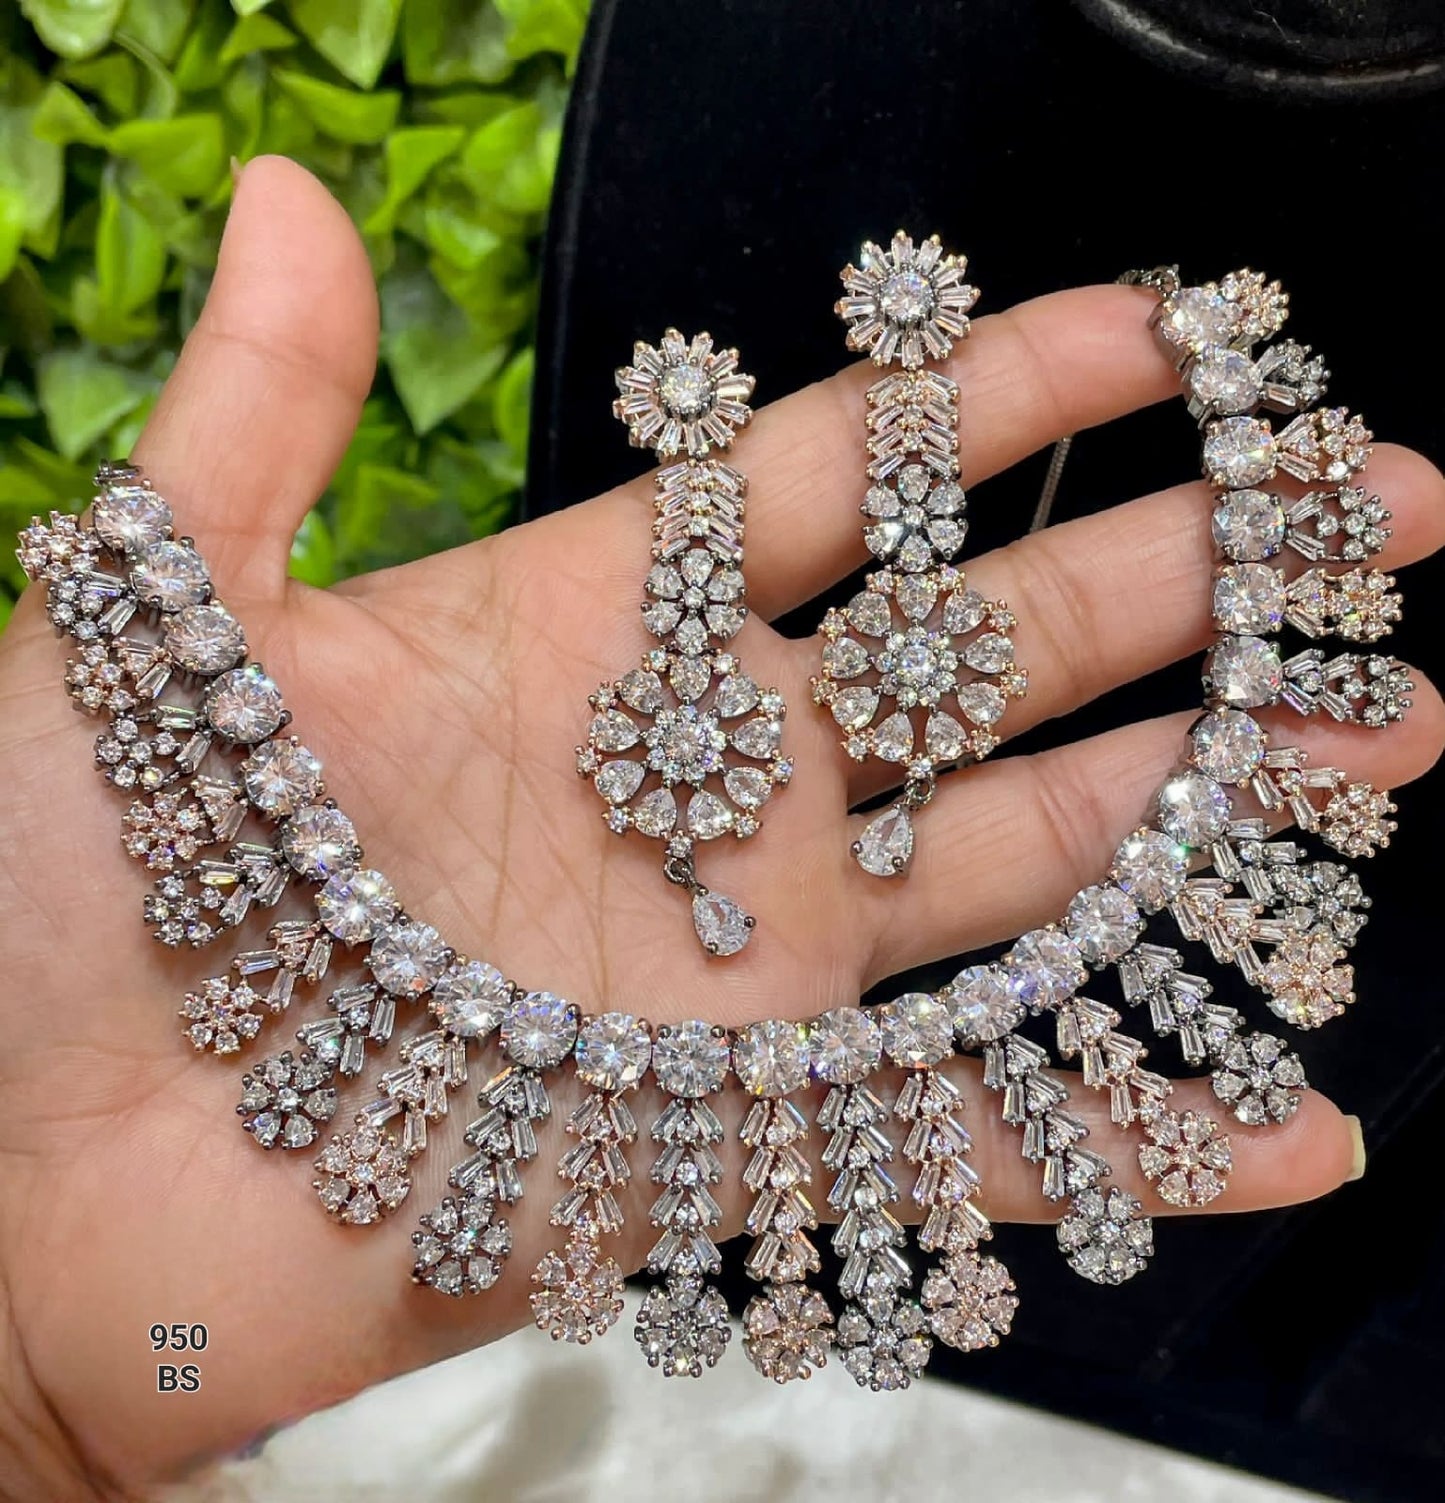 Sparkling American Diamond Jewelry Ensemble: Necklace & Earrings